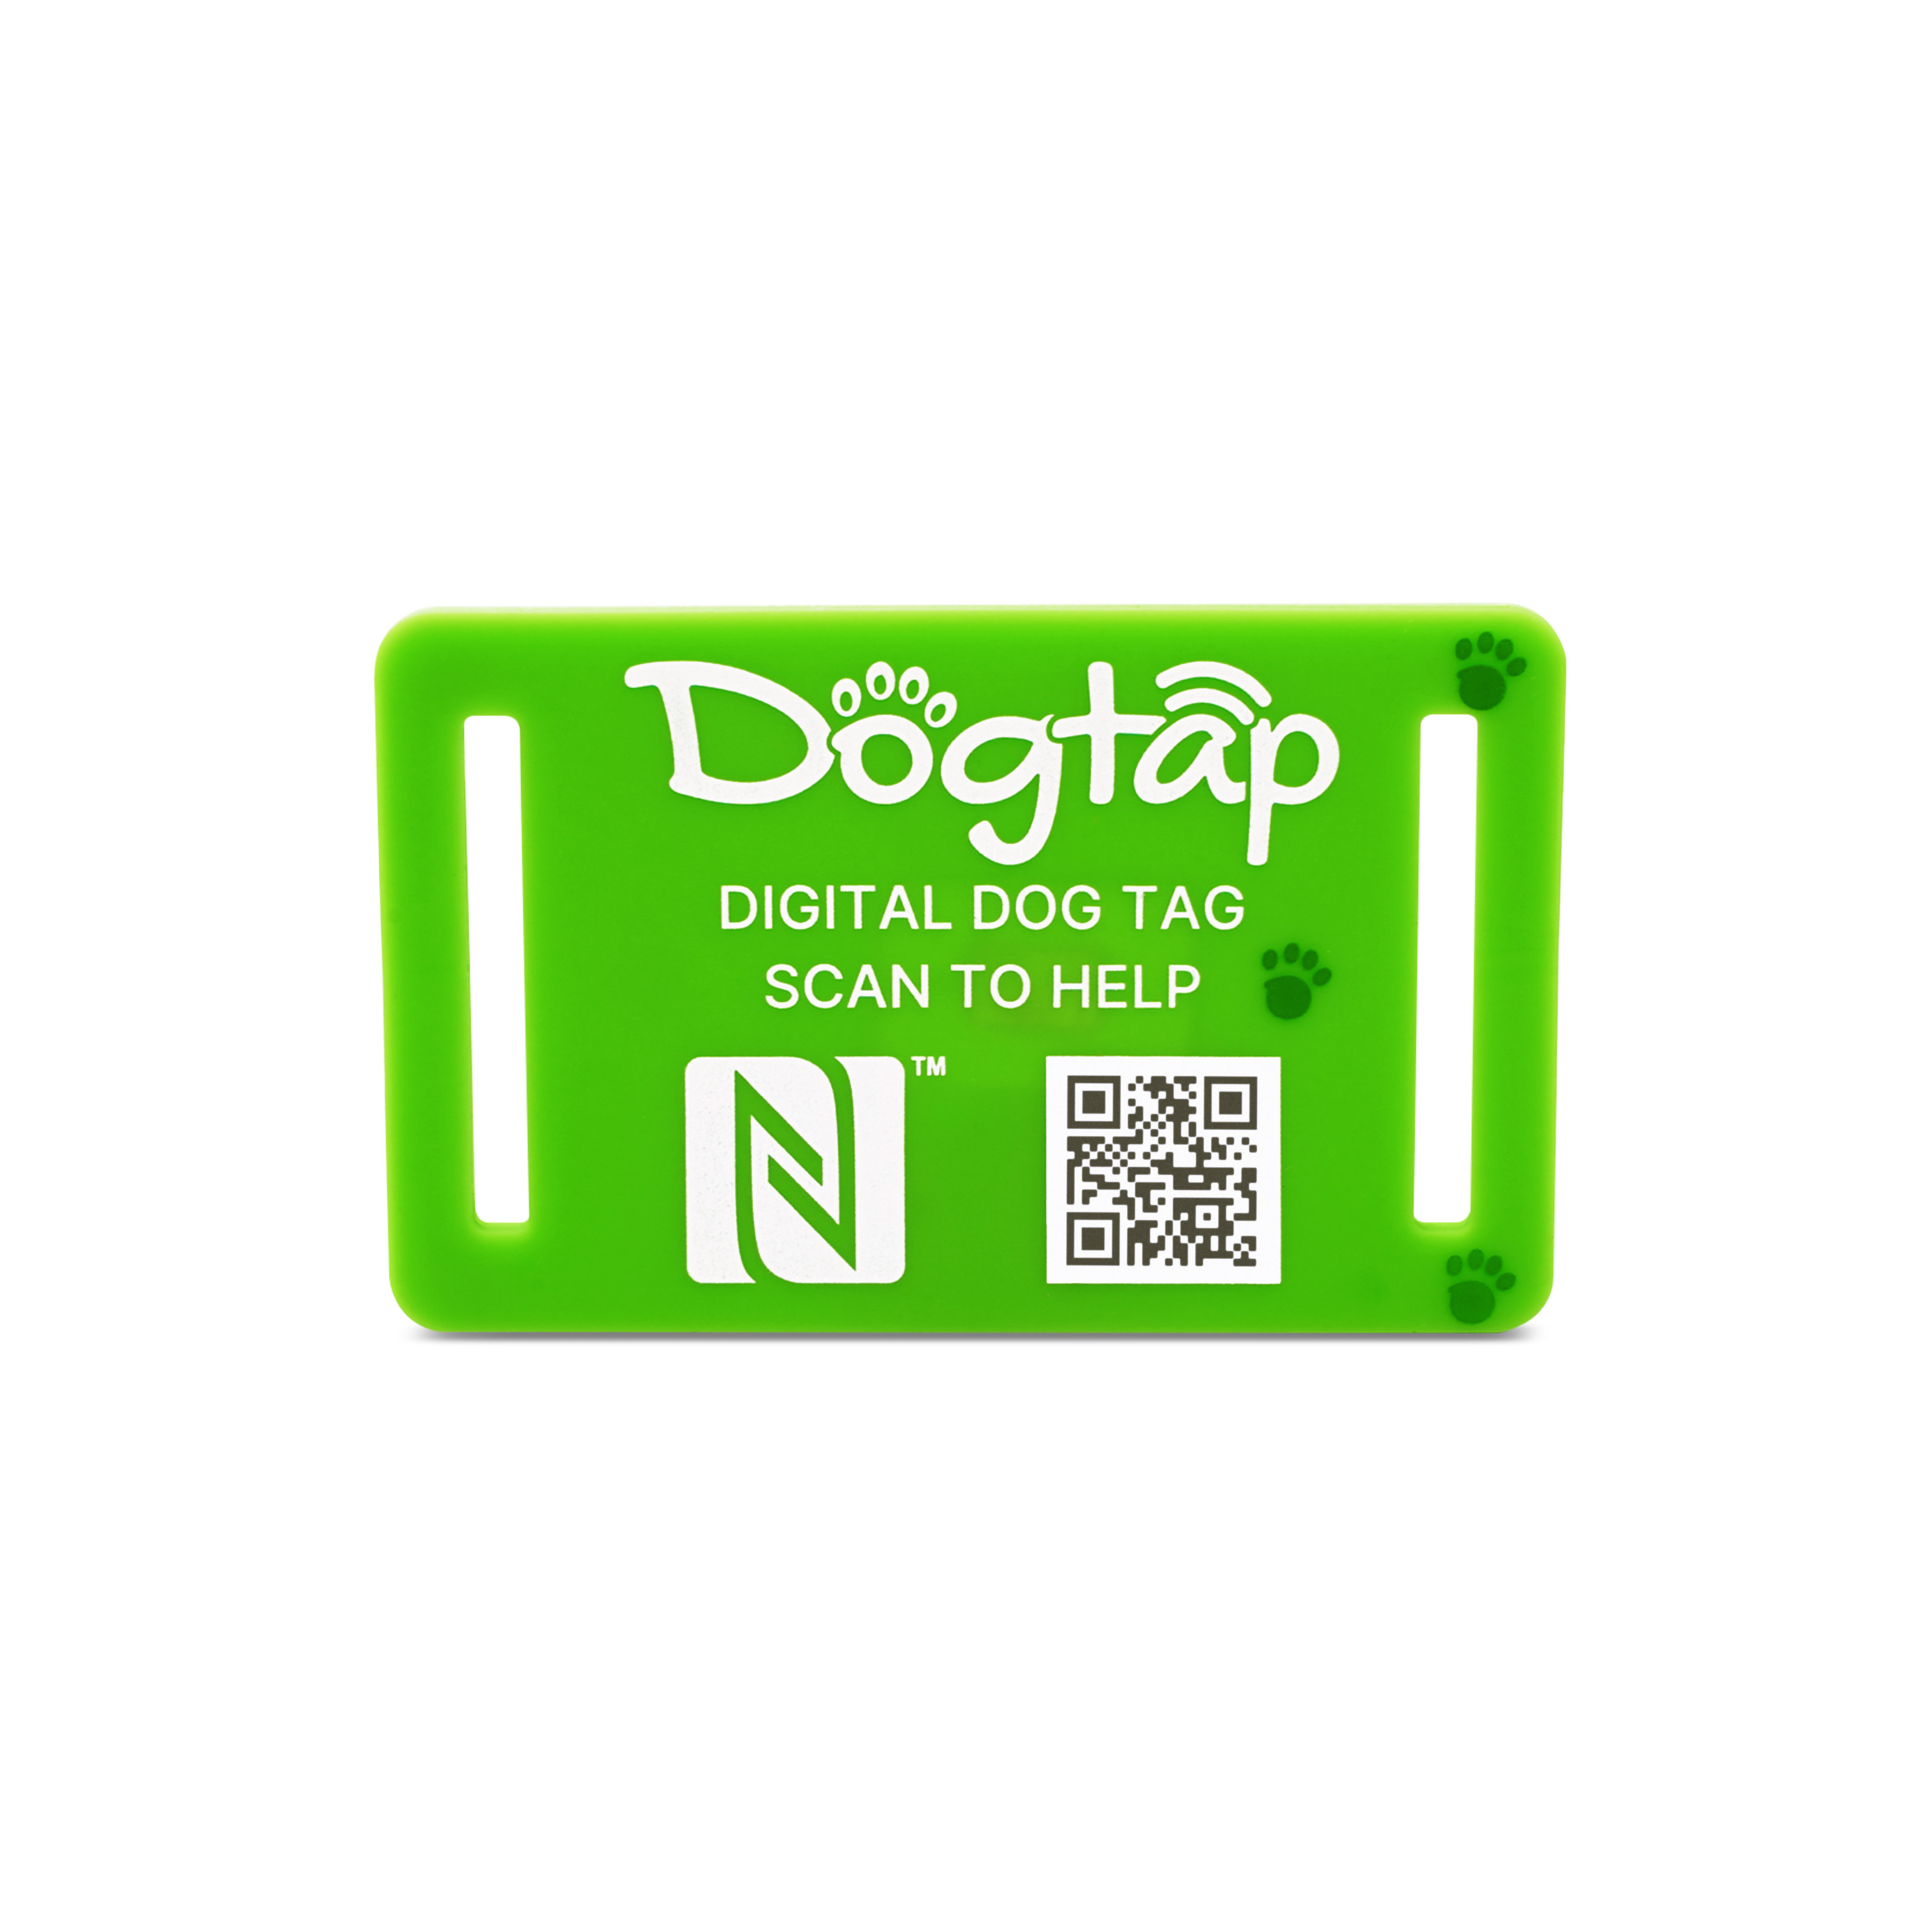 Dogtap Light Big - Digitale Hundemarke - Silikon - 67 x 40 mm - grün